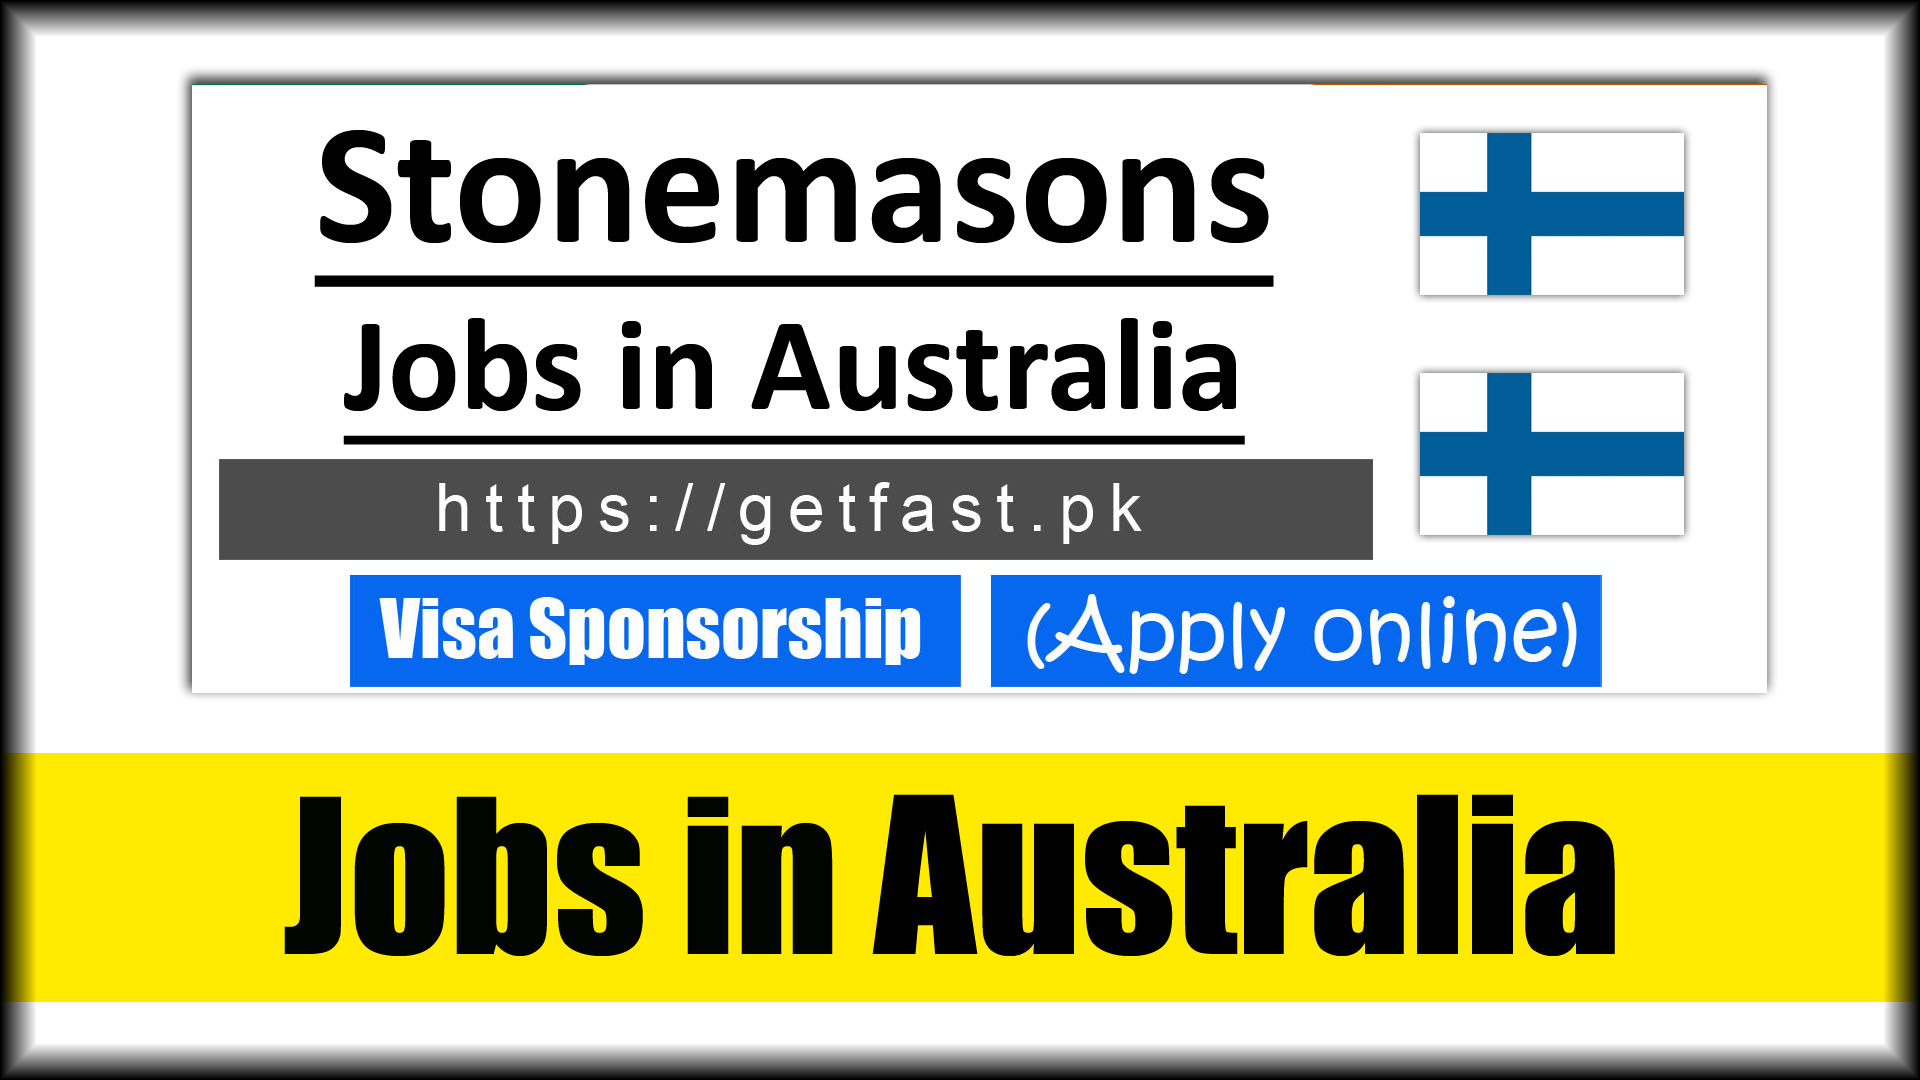 Stonemasons Jobs in Australia with Visa Sponsorship 2023 - Apply Online